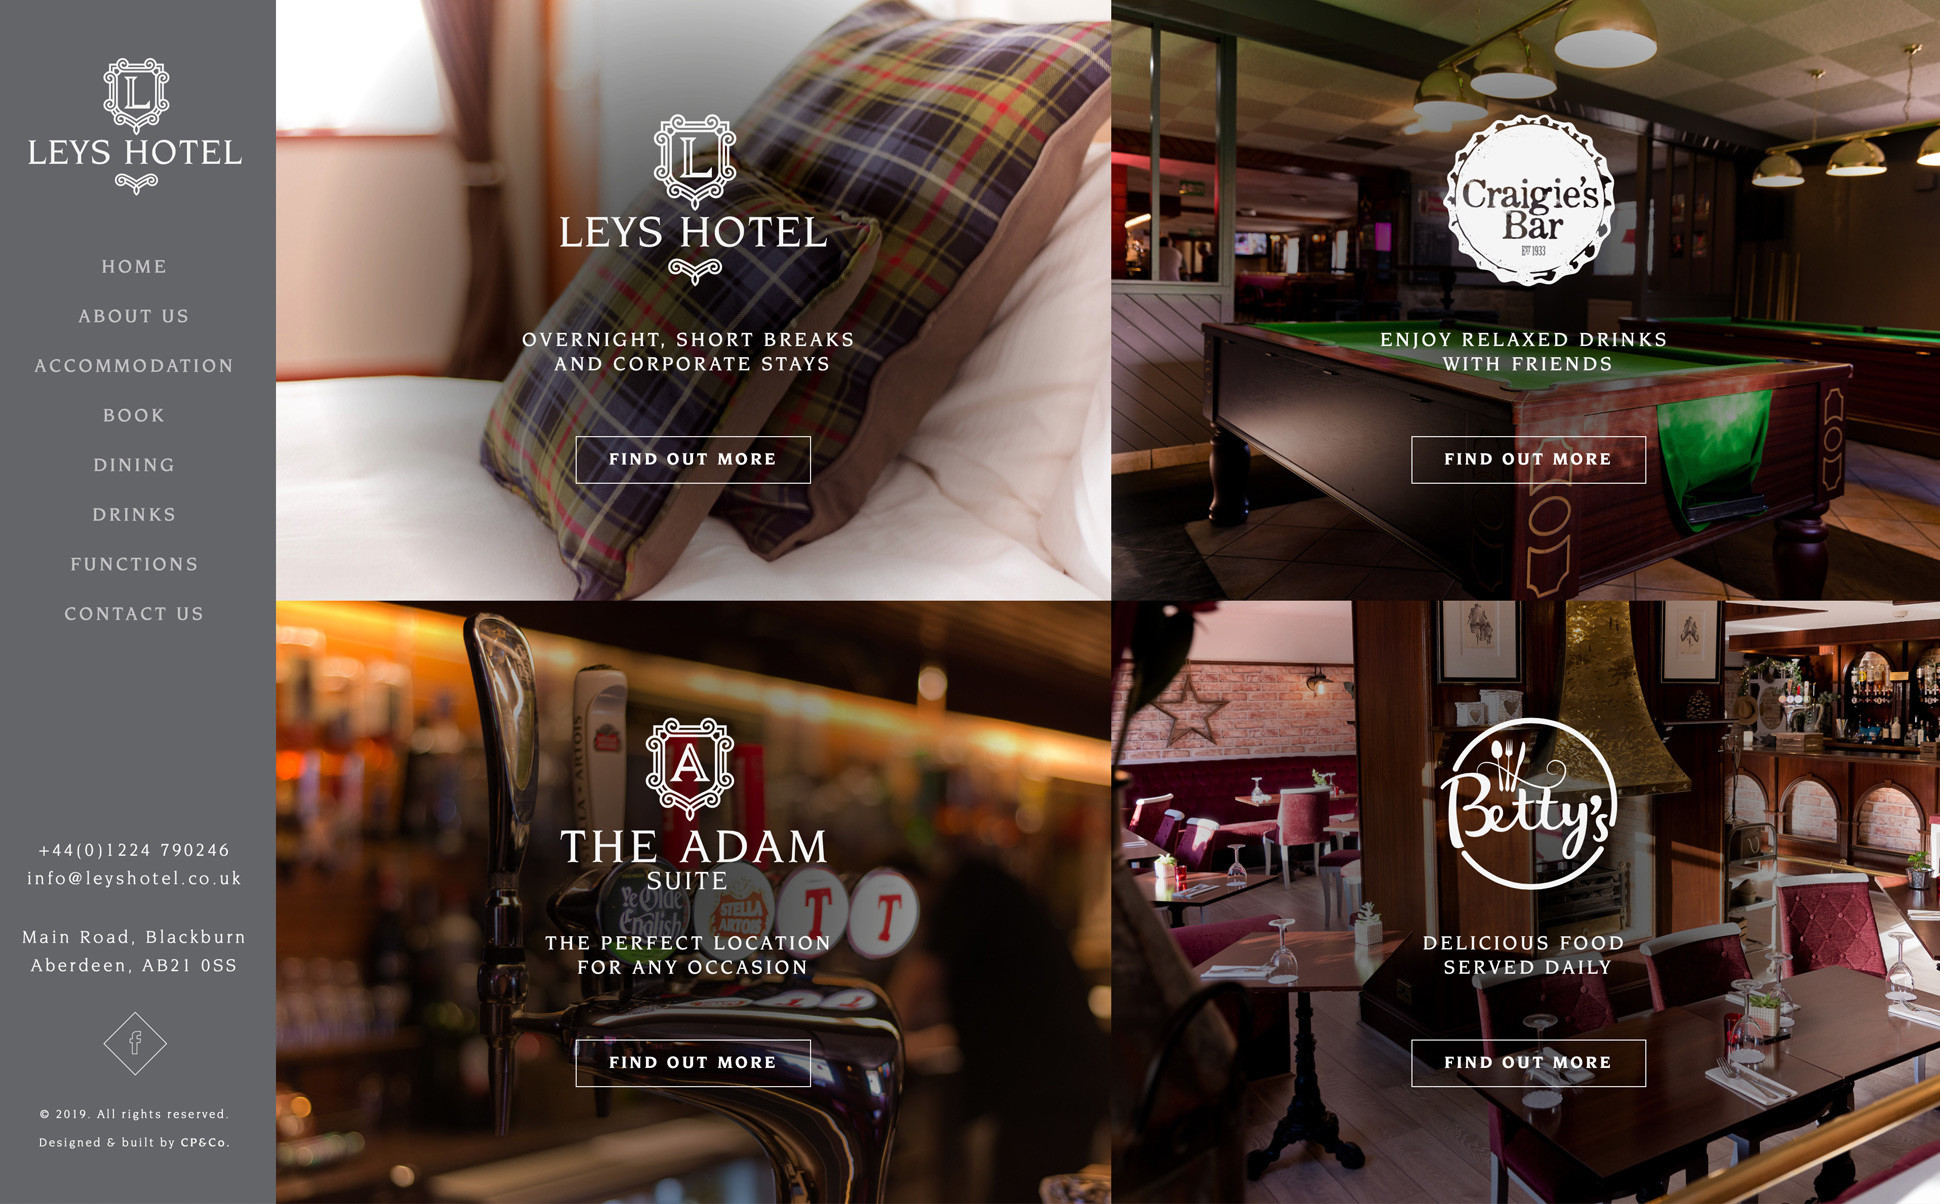 The Leys Hotel